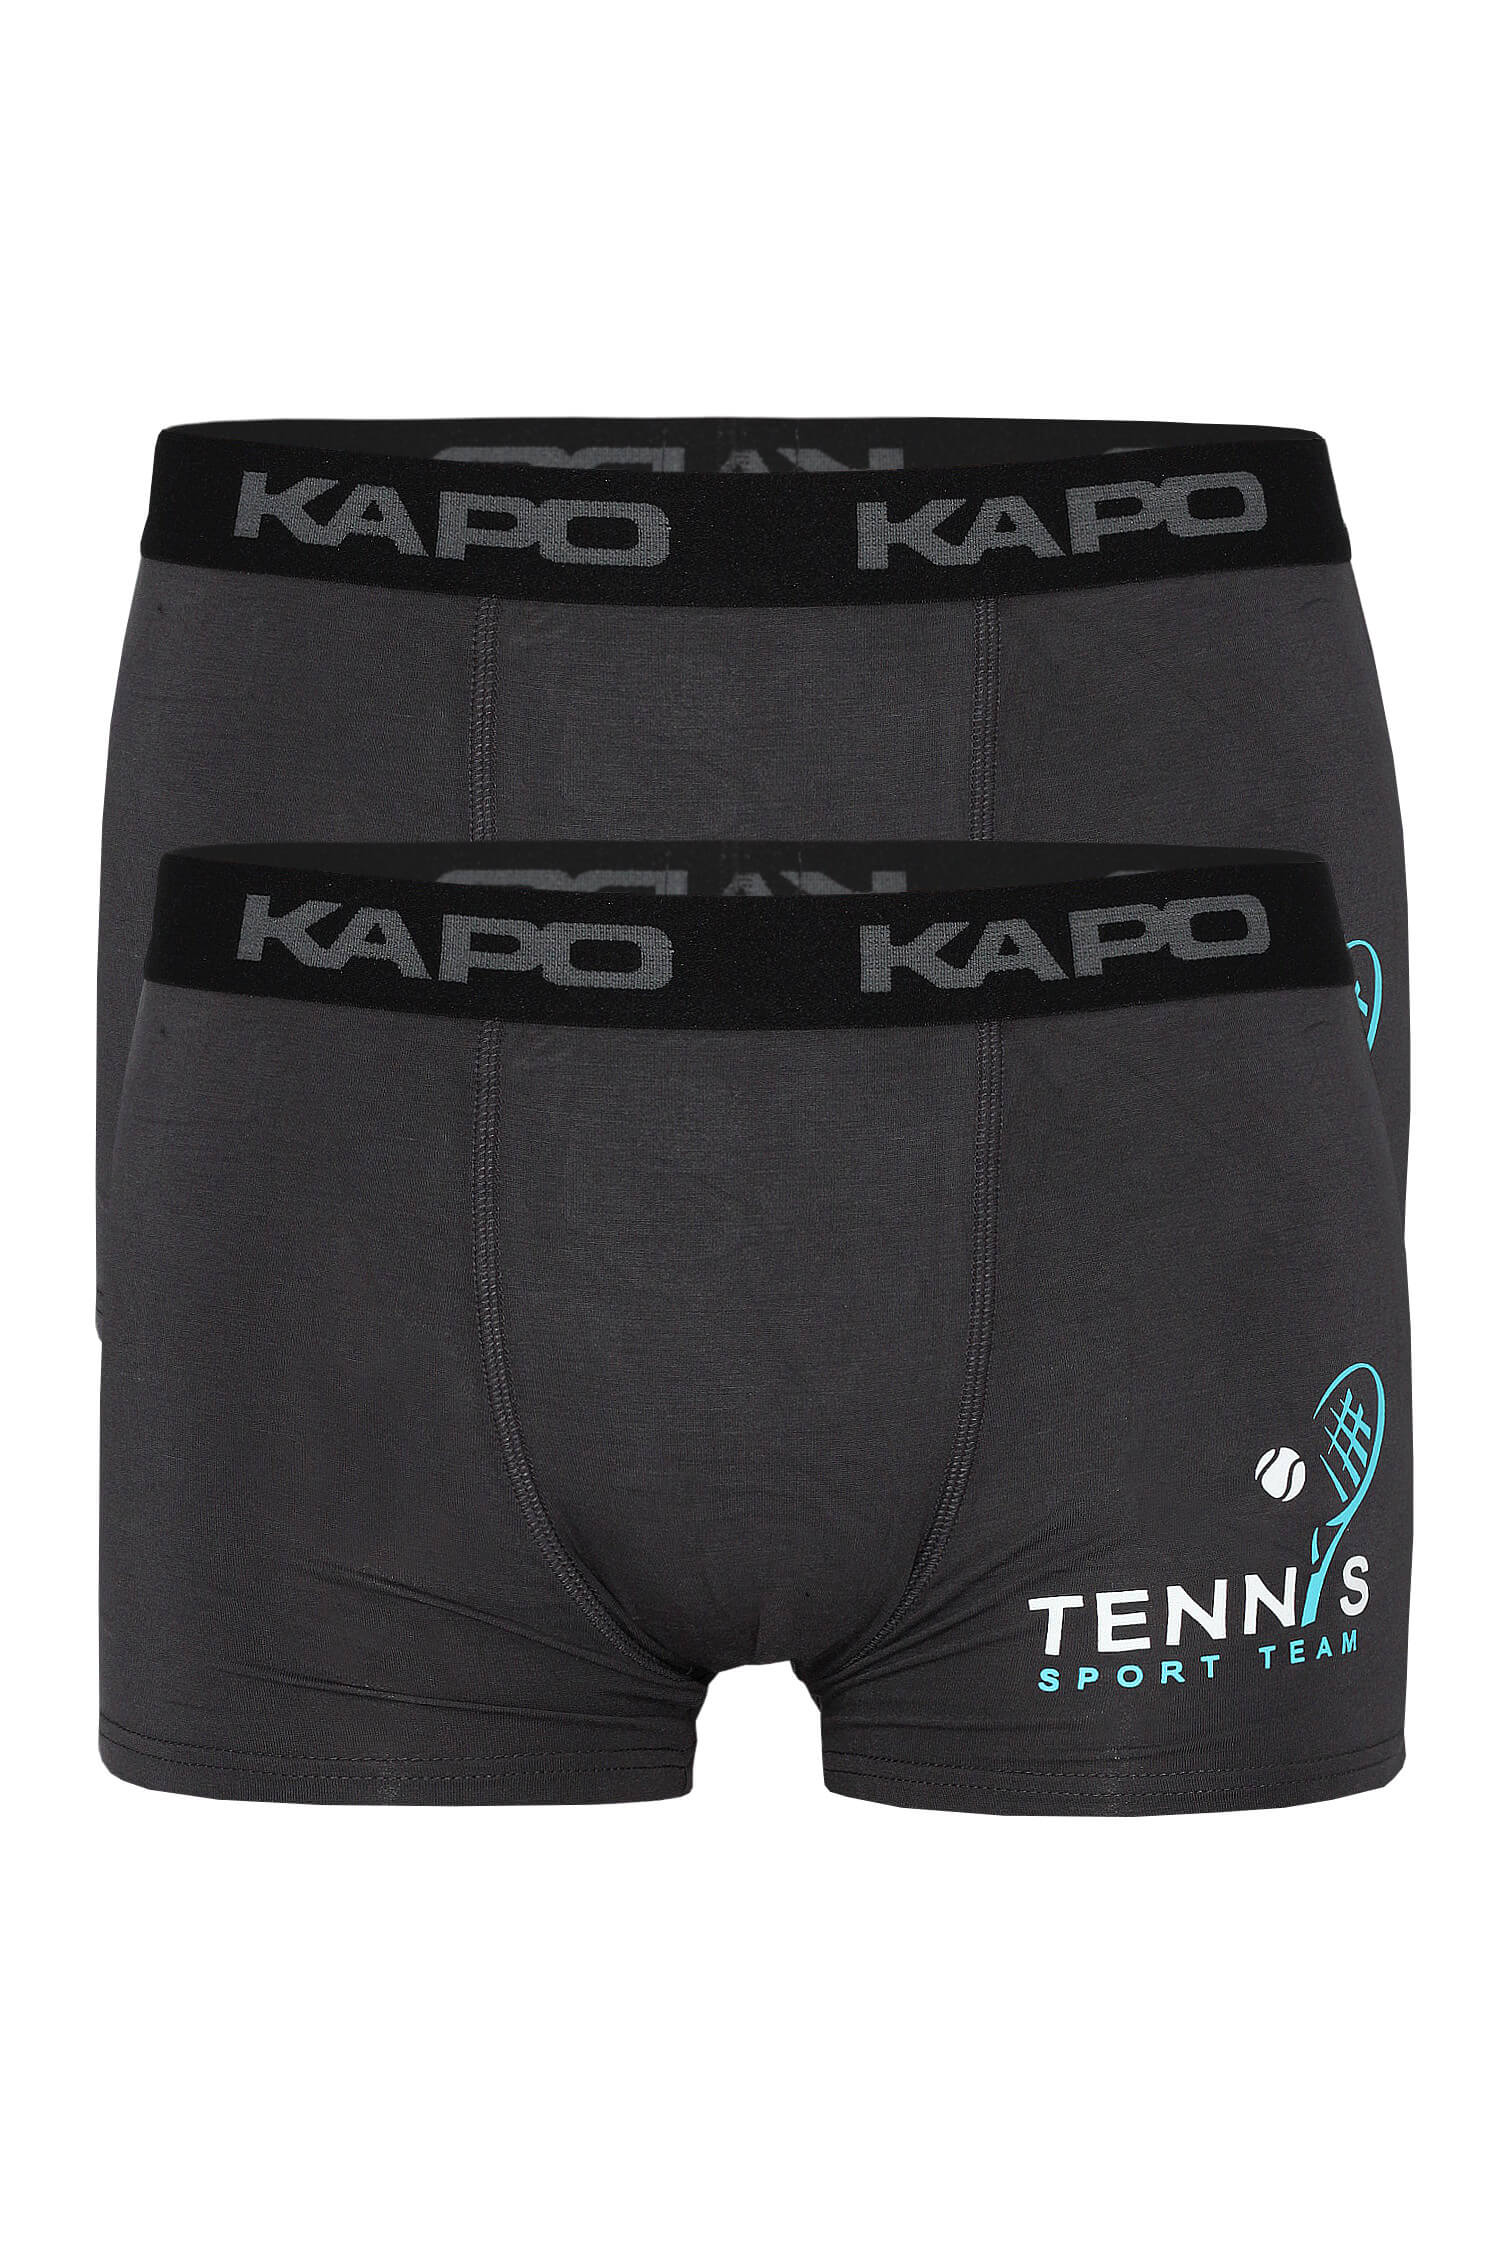 Rafael Kapo tenis boxerky - dvojbal M tmavě šedá